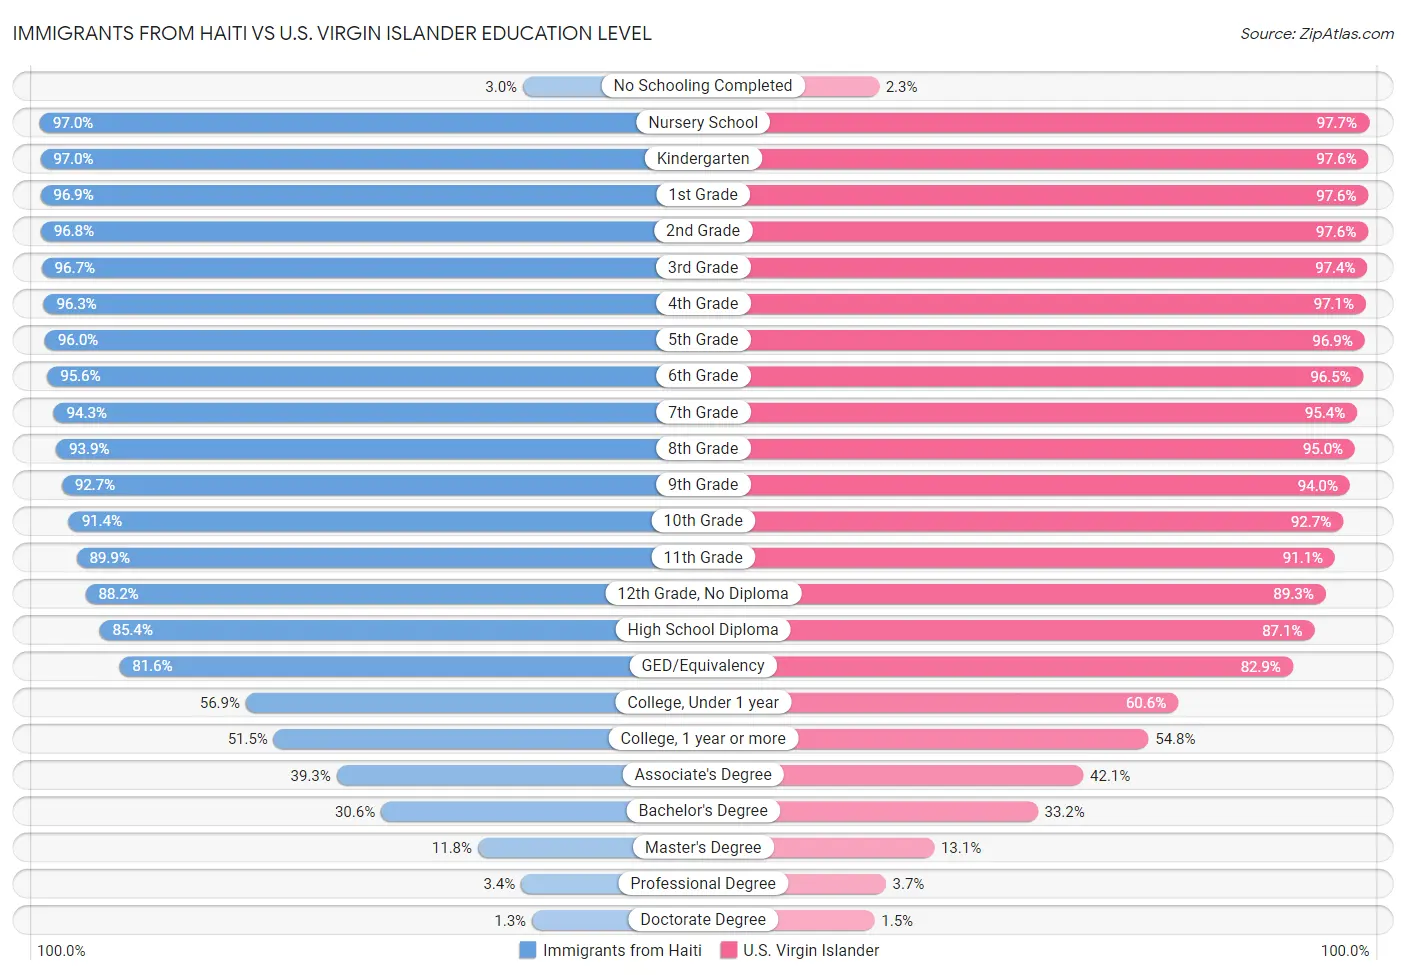 Immigrants from Haiti vs U.S. Virgin Islander Education Level